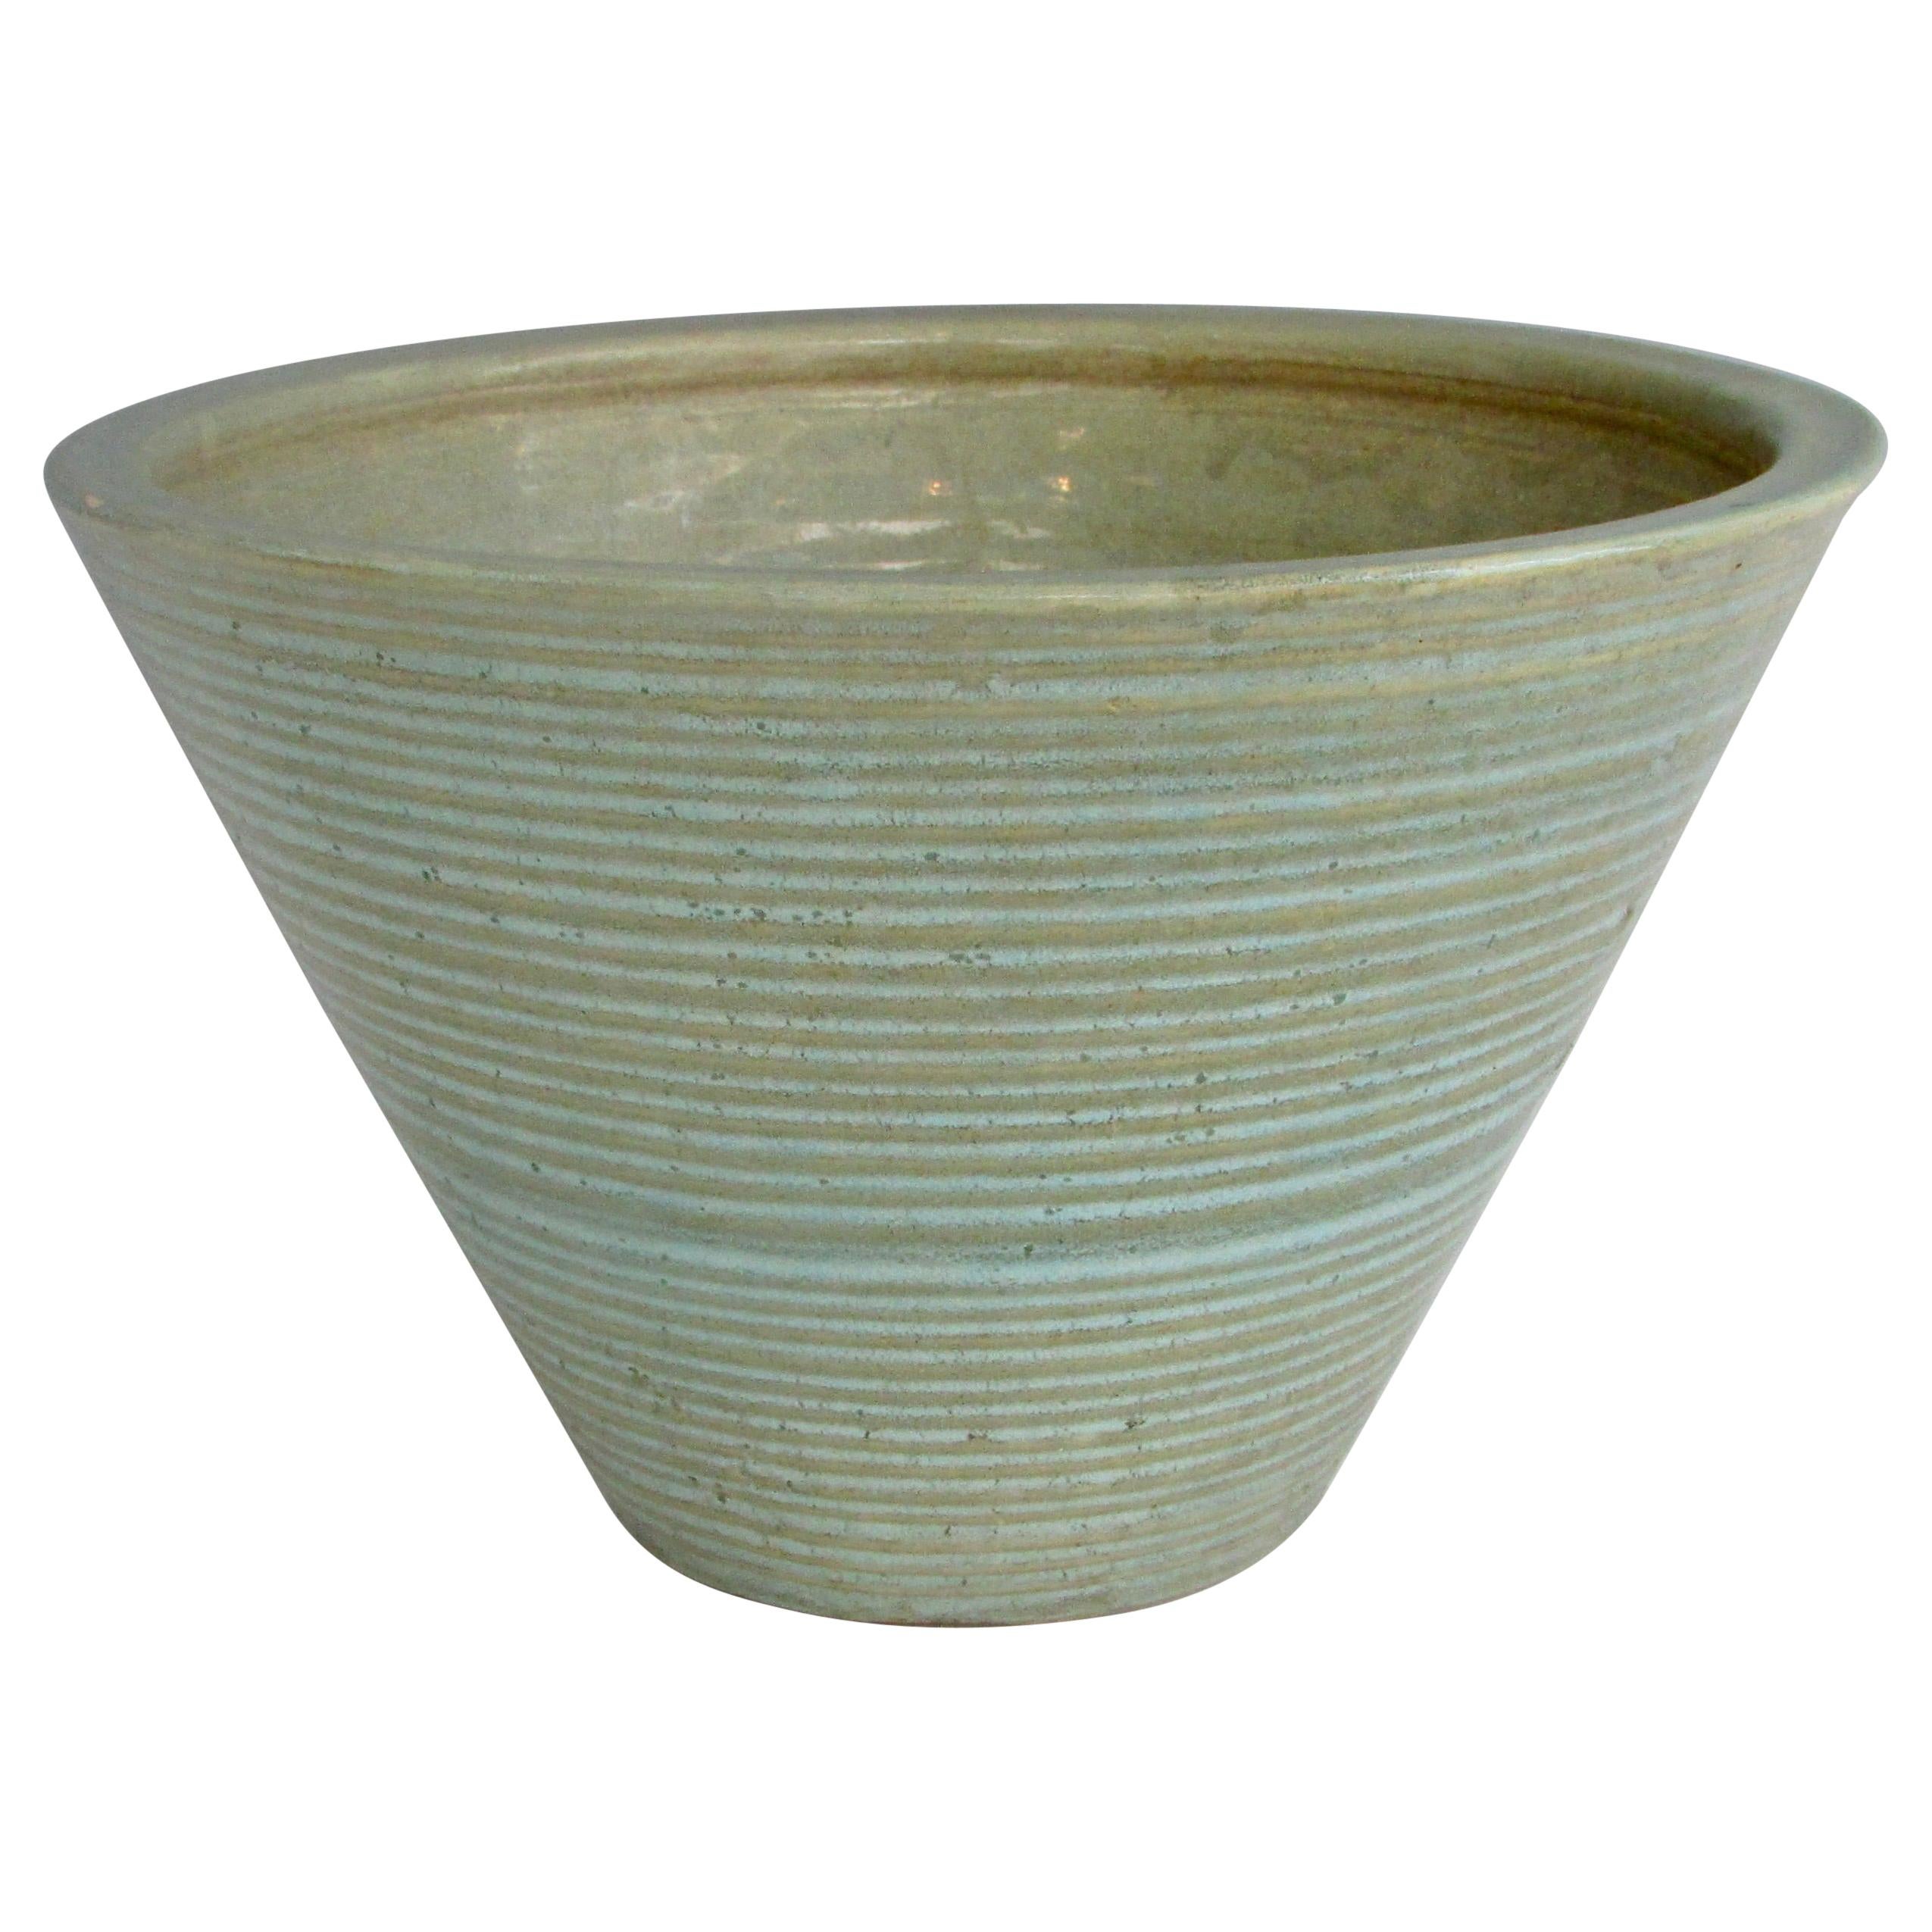 Zanesville Pottery Homespun Planter Pot Aqua with Green Ribs